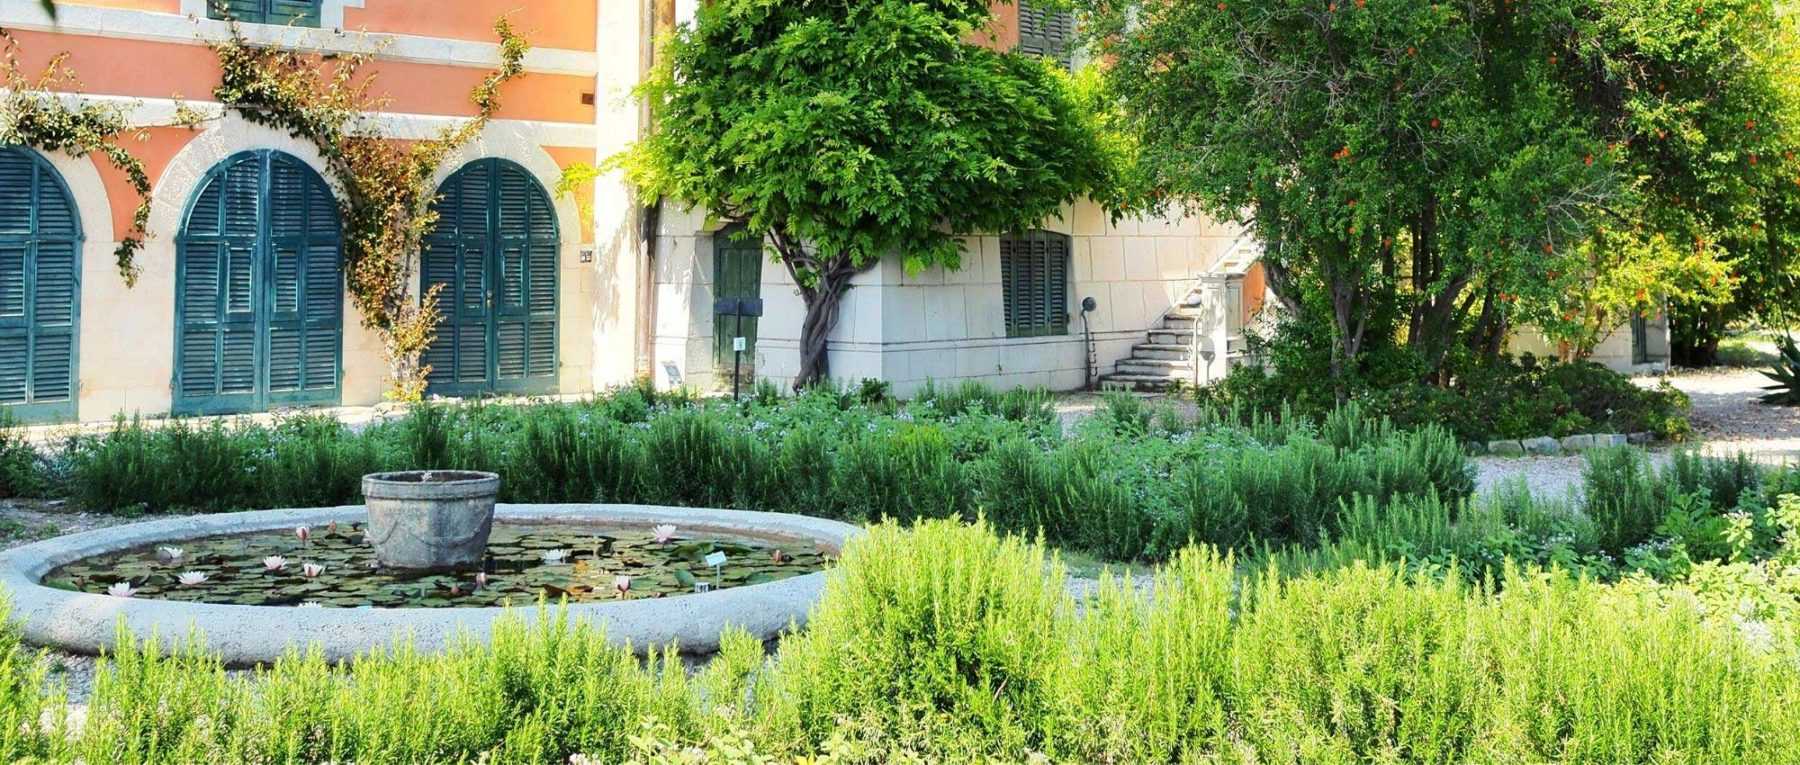 Jardin méditerranéen : nos conseils pour l'aménager !